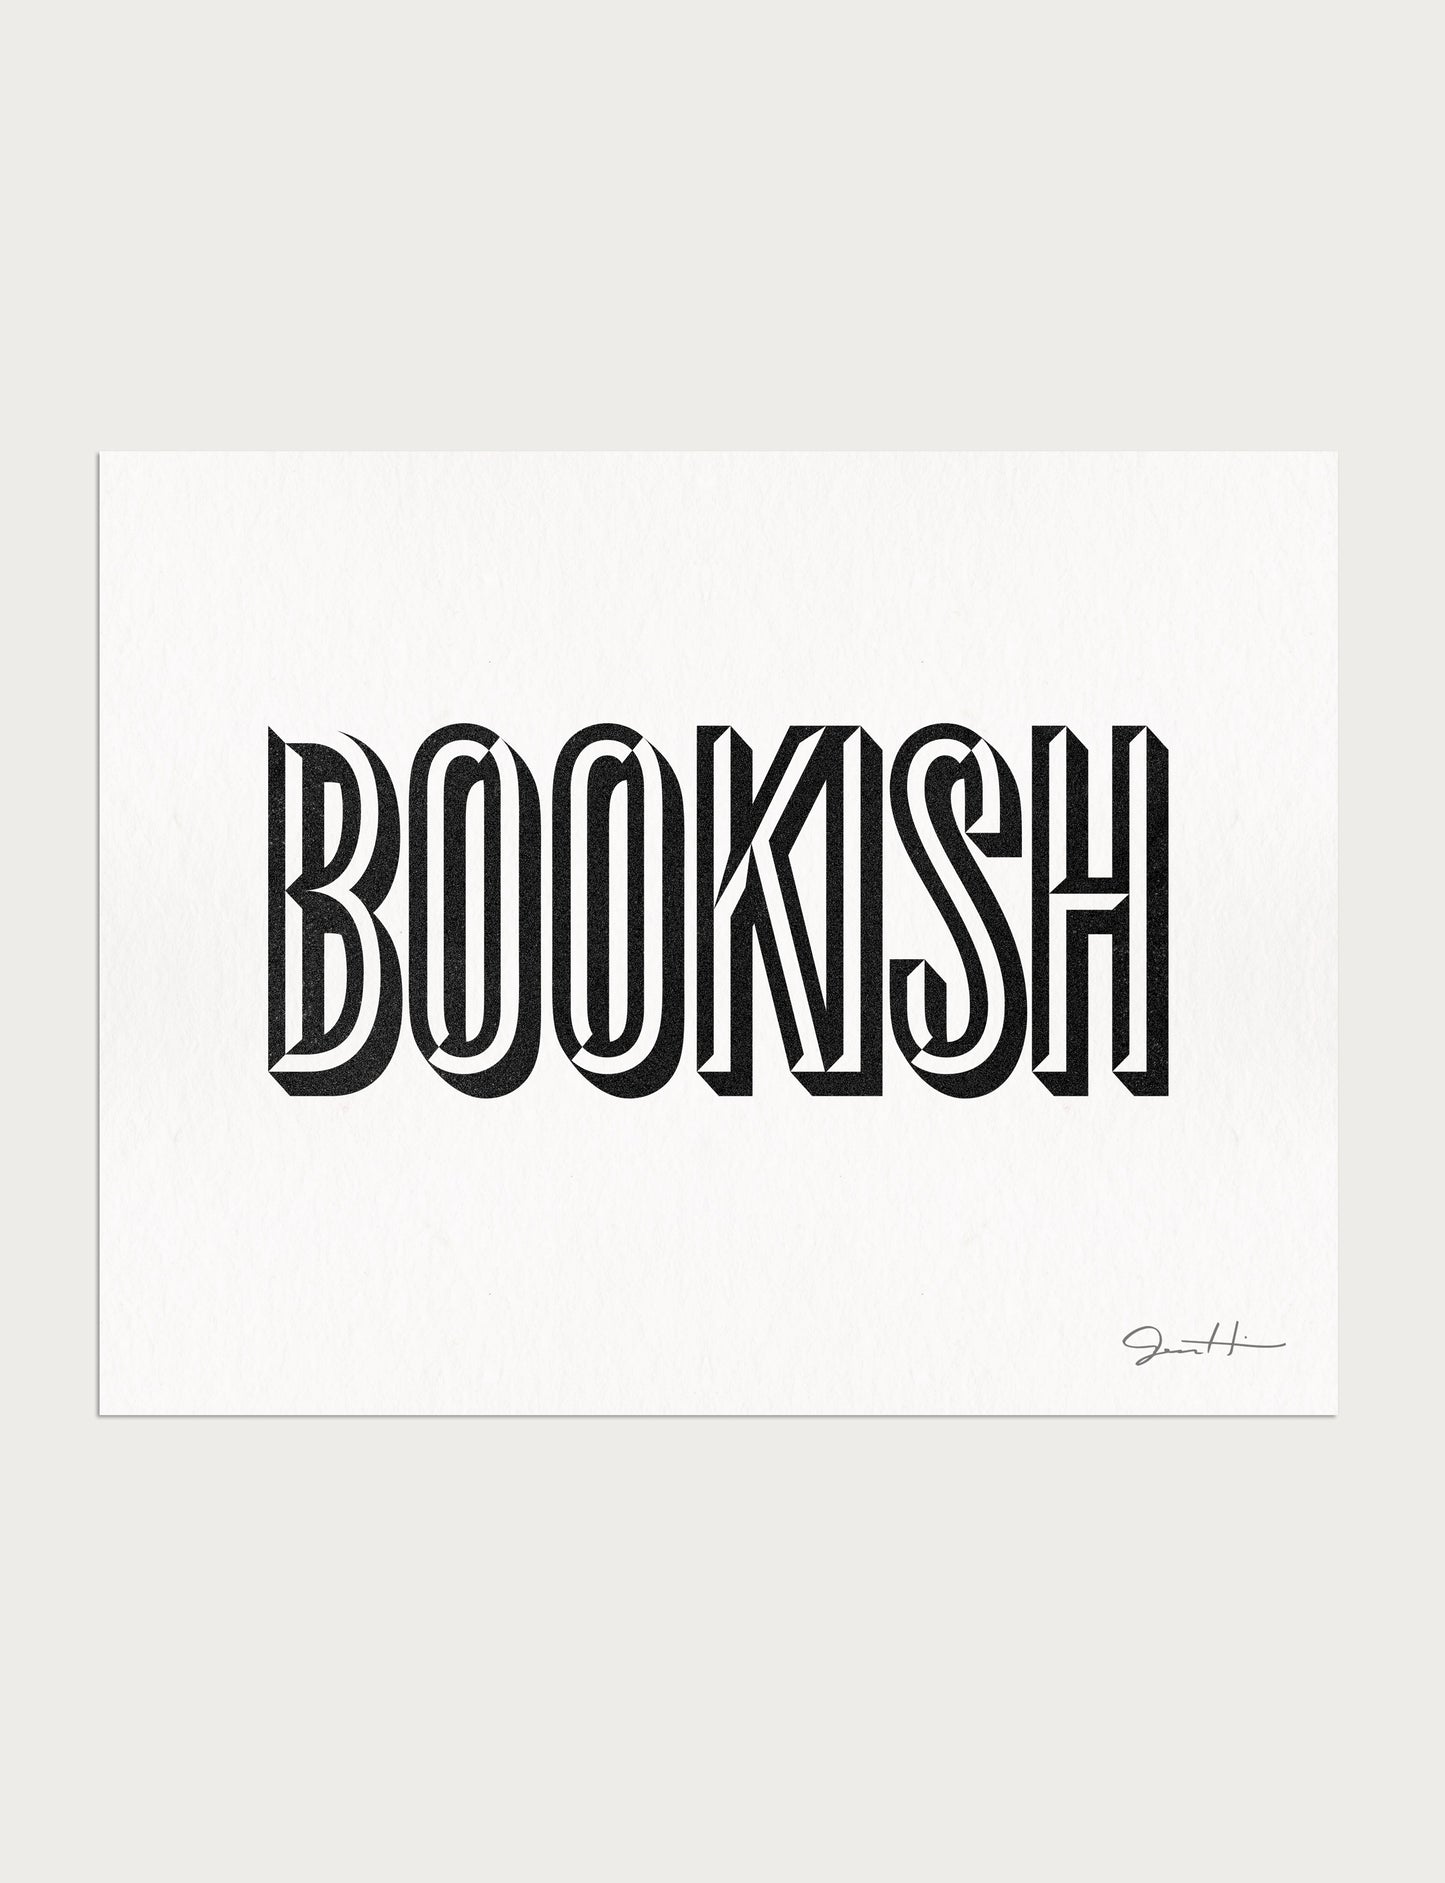 Bookish Print